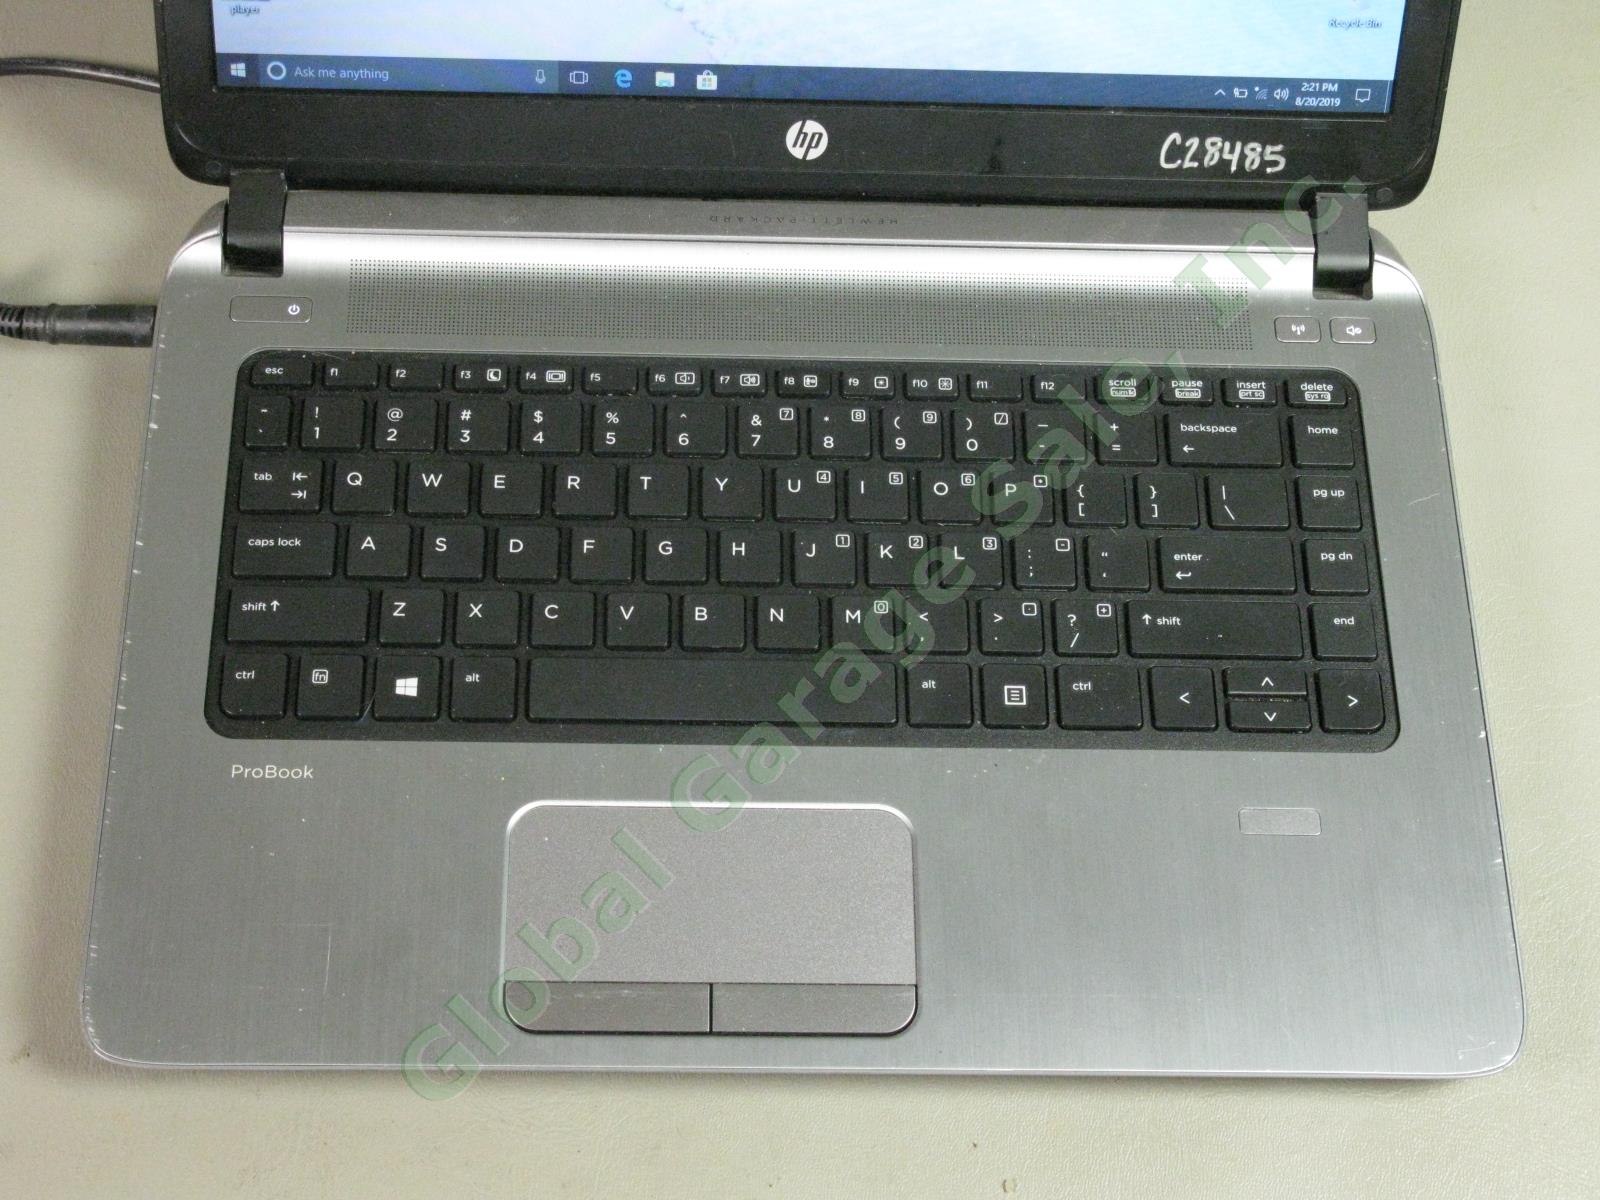 HP ProBook Laptop 440 G2 i5-5200U 2.20GHz 4GB RAM 460GB HD Windows 10 Pro Refurb 1